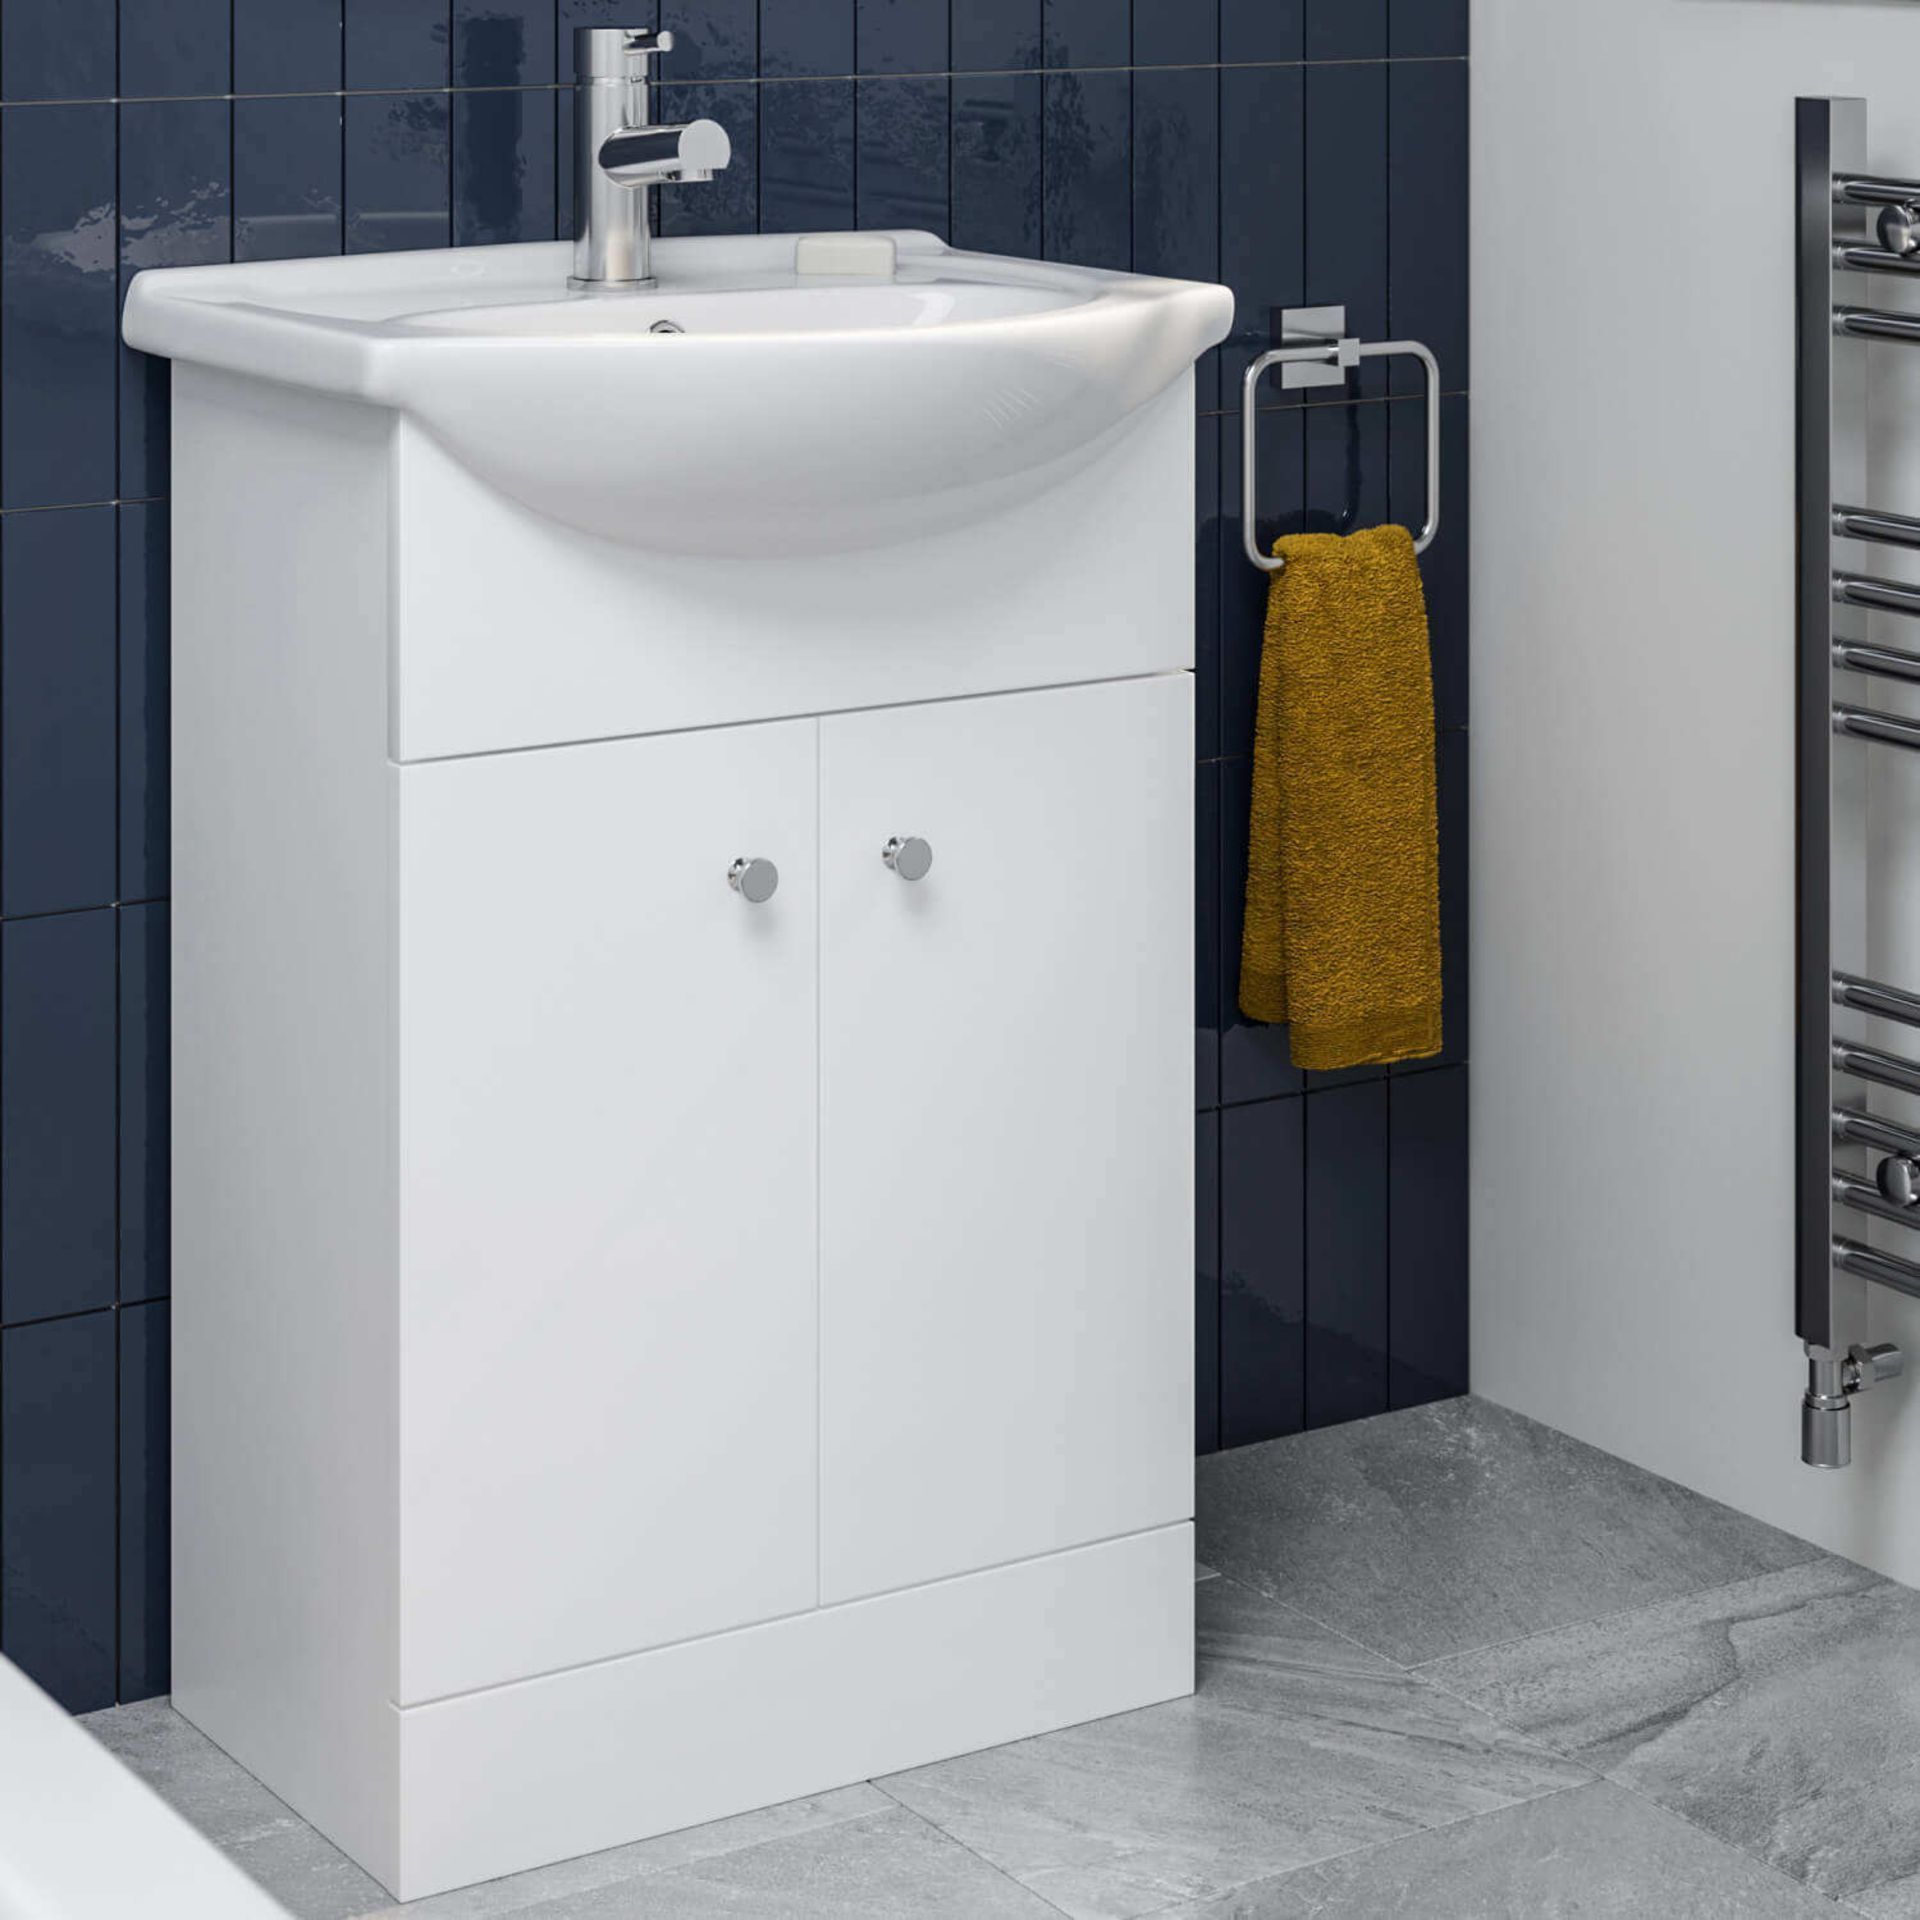 BRAND NEW BOXED 550mm Quartz Basin Sink Vanity Unit Floor Standing White. RRP £349.99. - Image 2 of 3